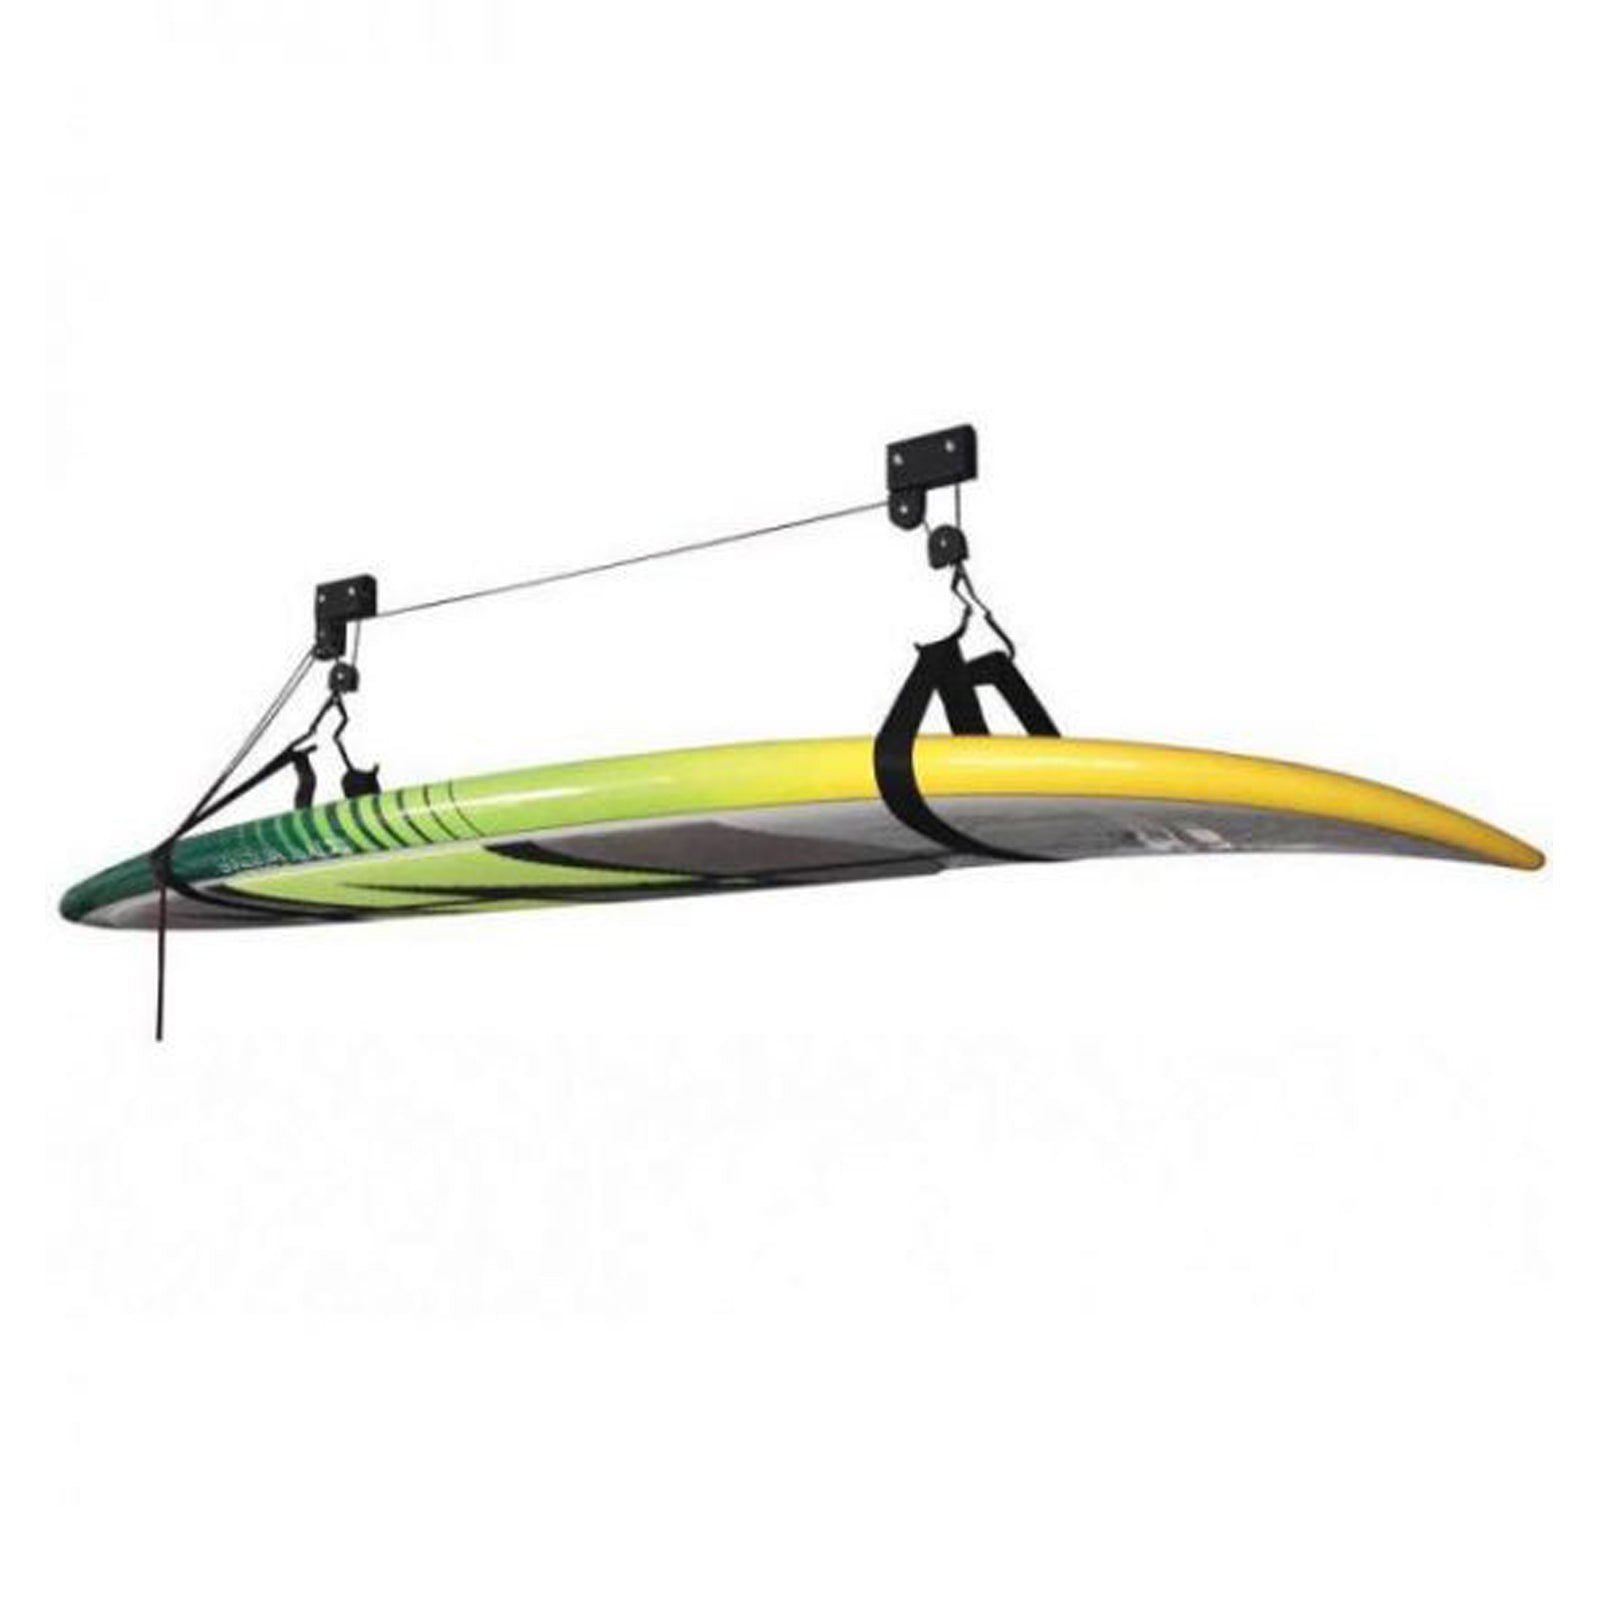 Hoist_yelllow.green-surfboard.no-watermark